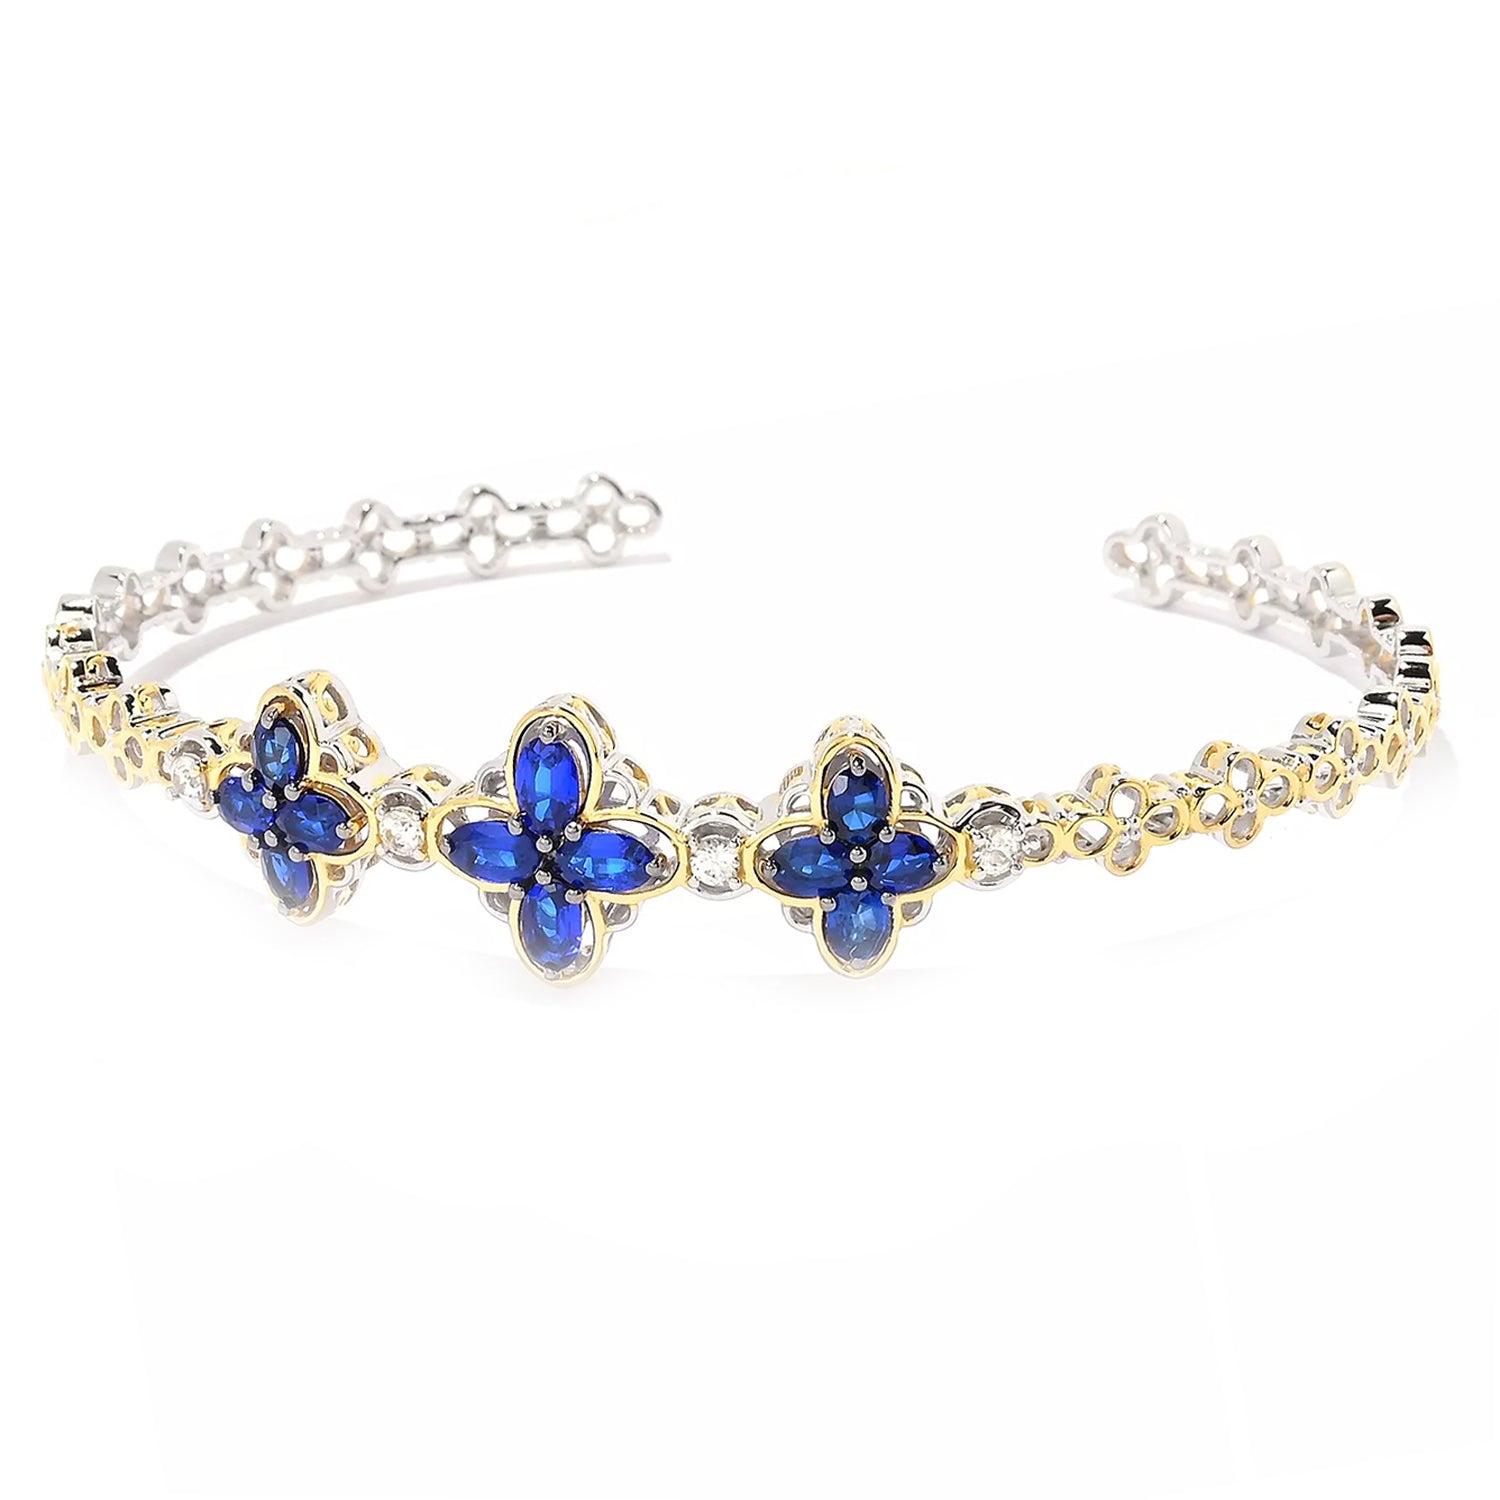 Gems en Vogue 2.84ctw Cobalt Blue Spinel & White Zircon Cuff Bangle Bracelet